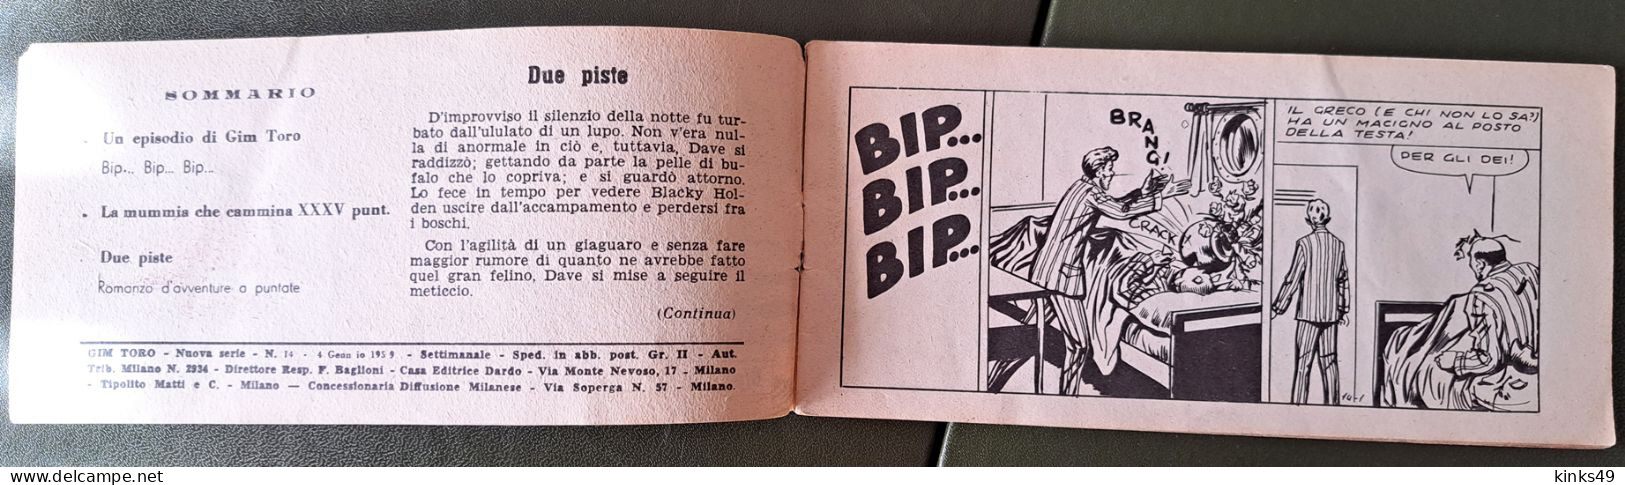 M228> GIM TORO "Bip... Bip... Bip..." Striscia DARDO N° 14 Del 4 GENNAIO 1959 - Prime Edizioni